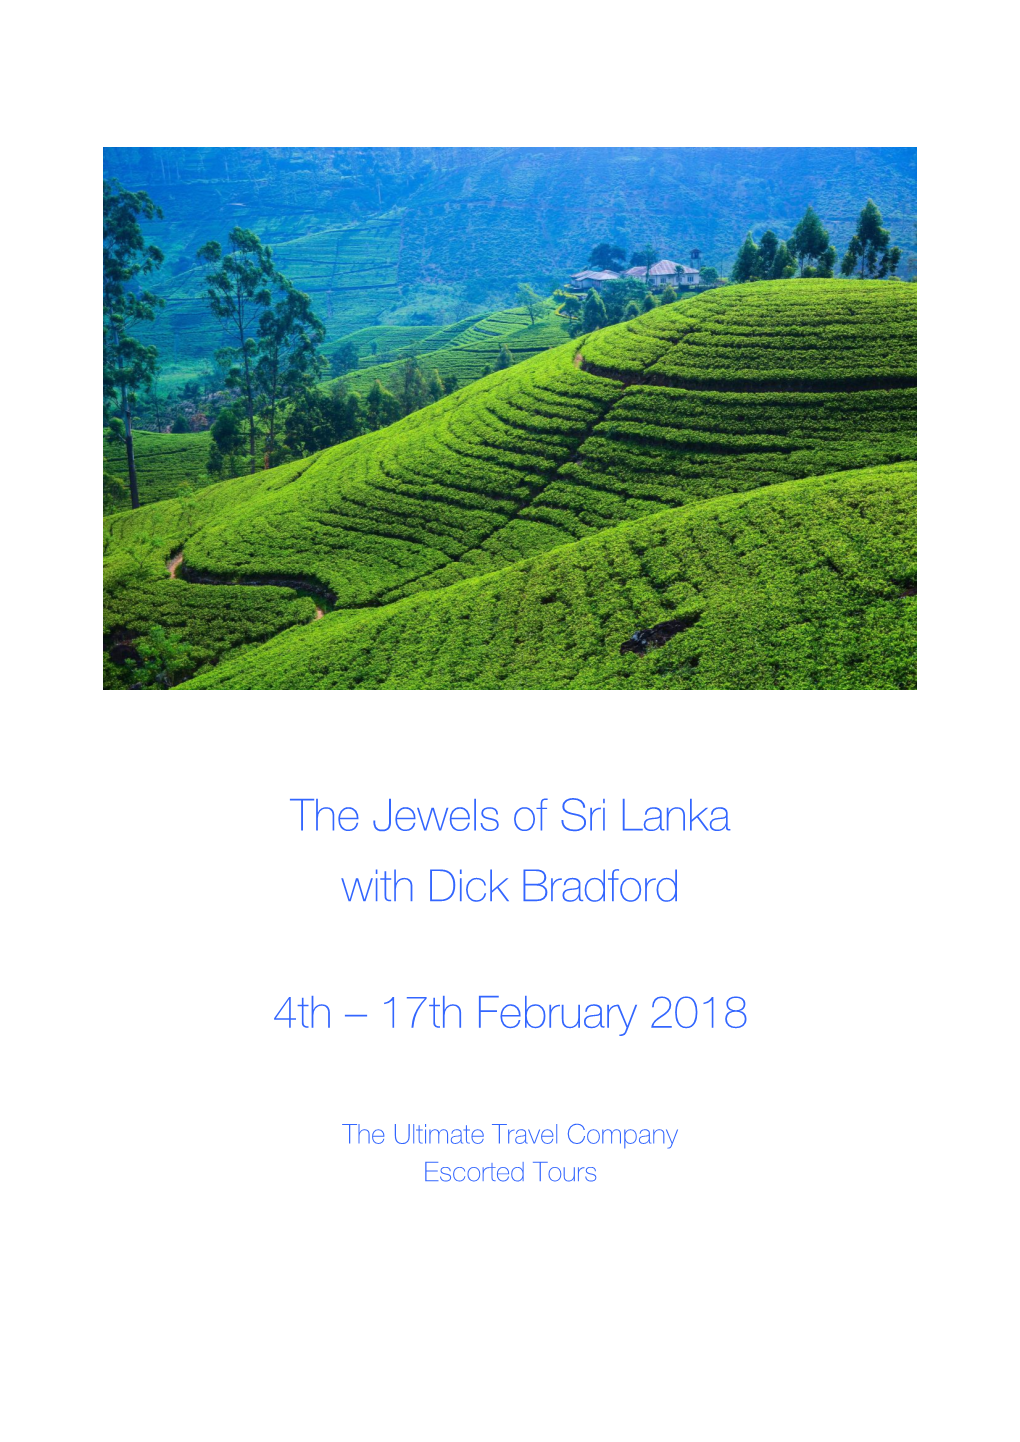 The Jewels of Sri Lanka with Dick Bradford